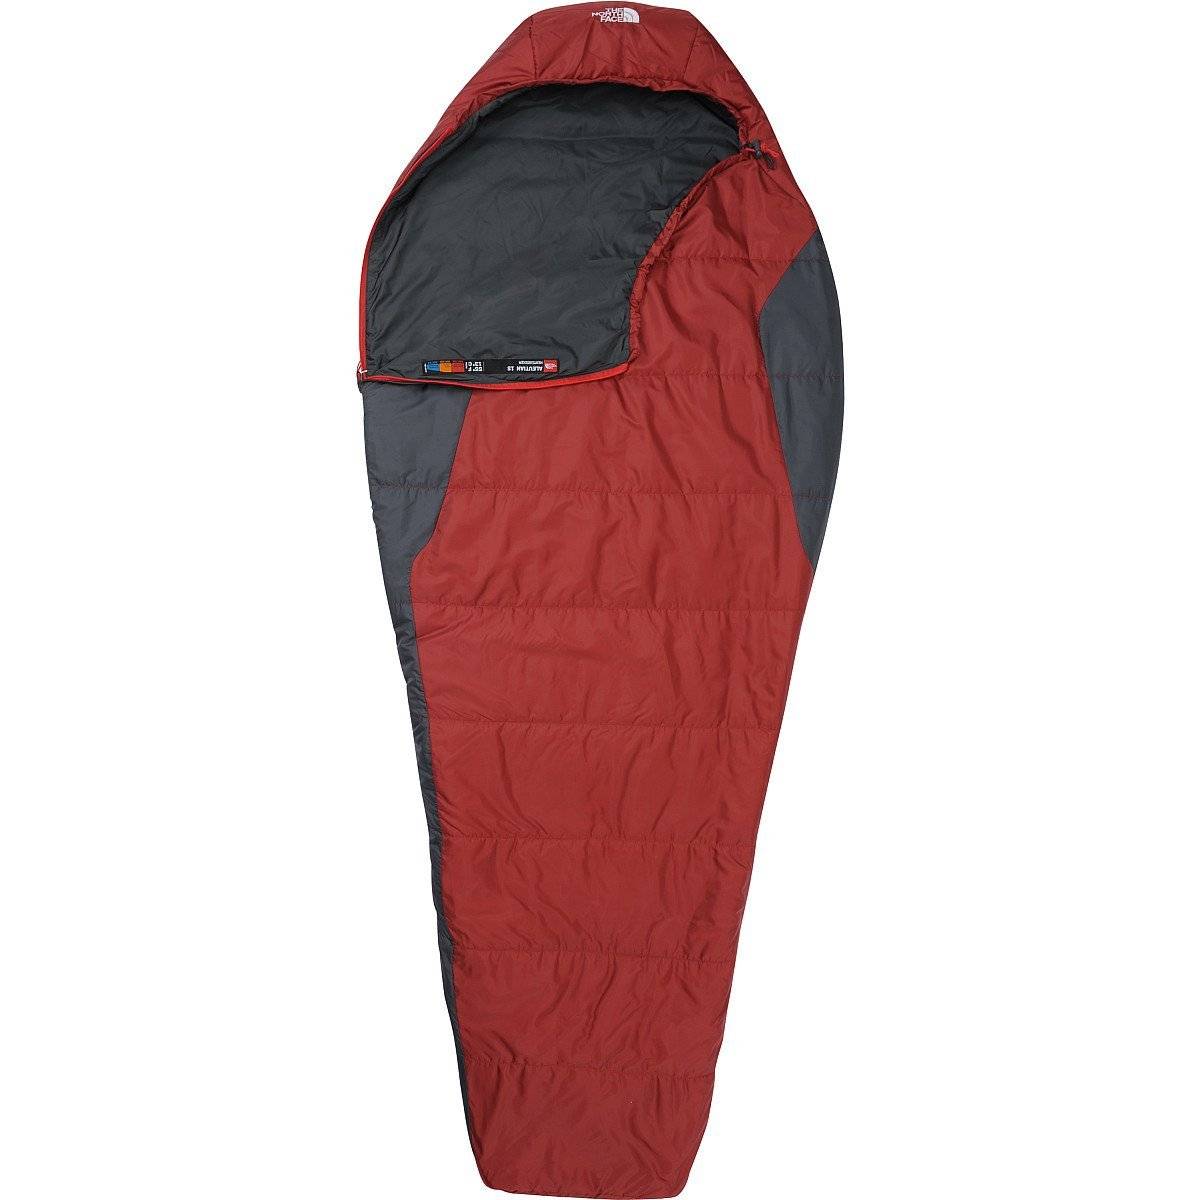 The North Face Aleutian 55°F Sleeping Bag